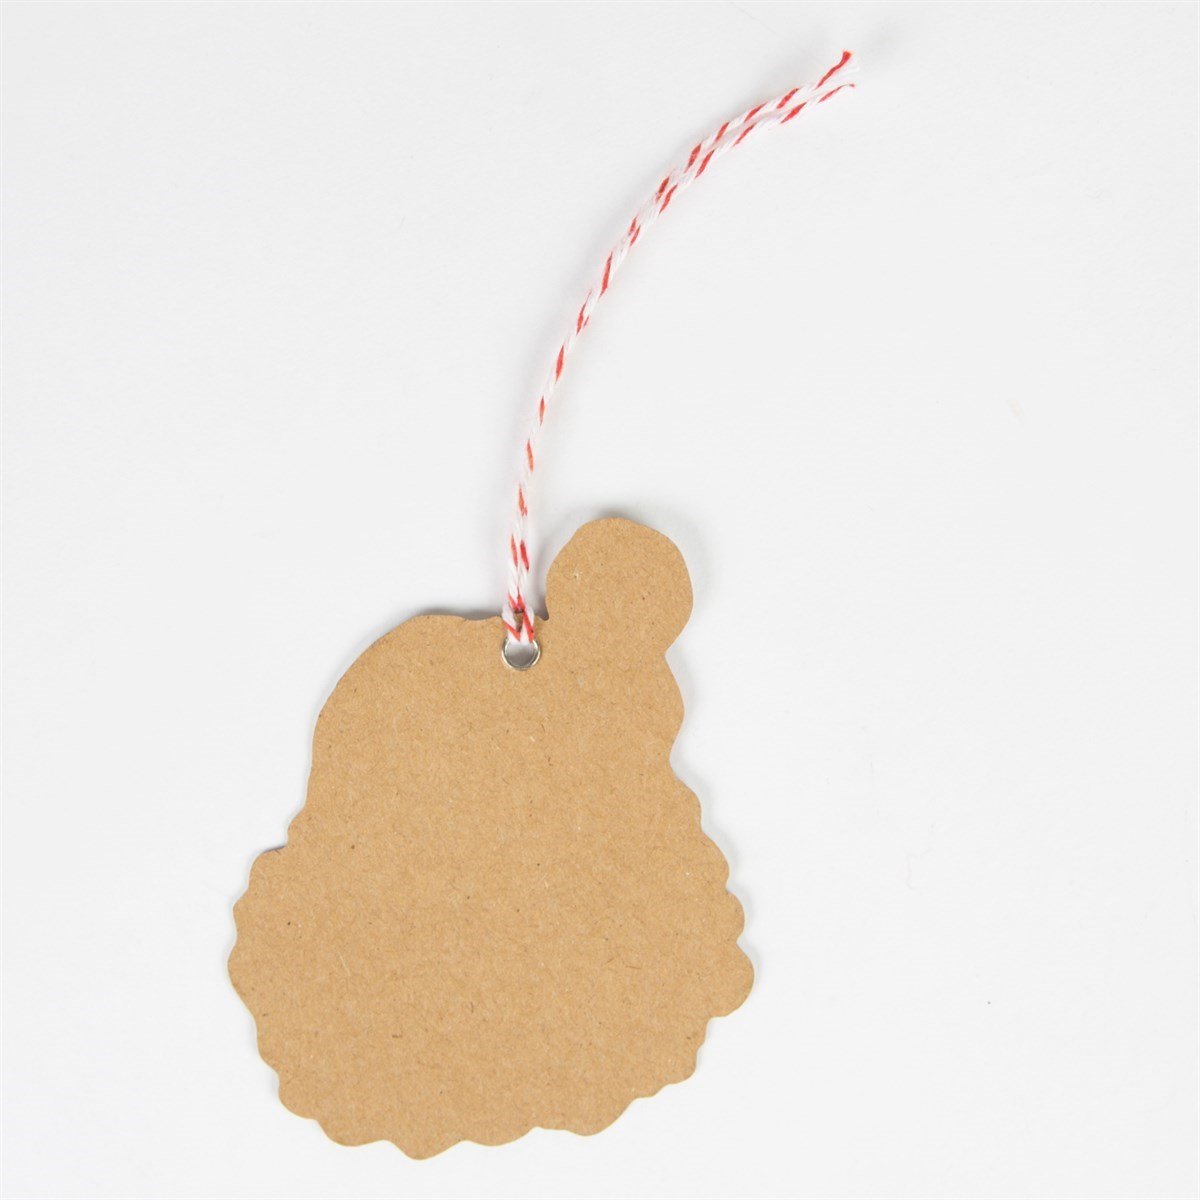 Cheerful Father Christmas (Santa) Gift Tags - Set of 10